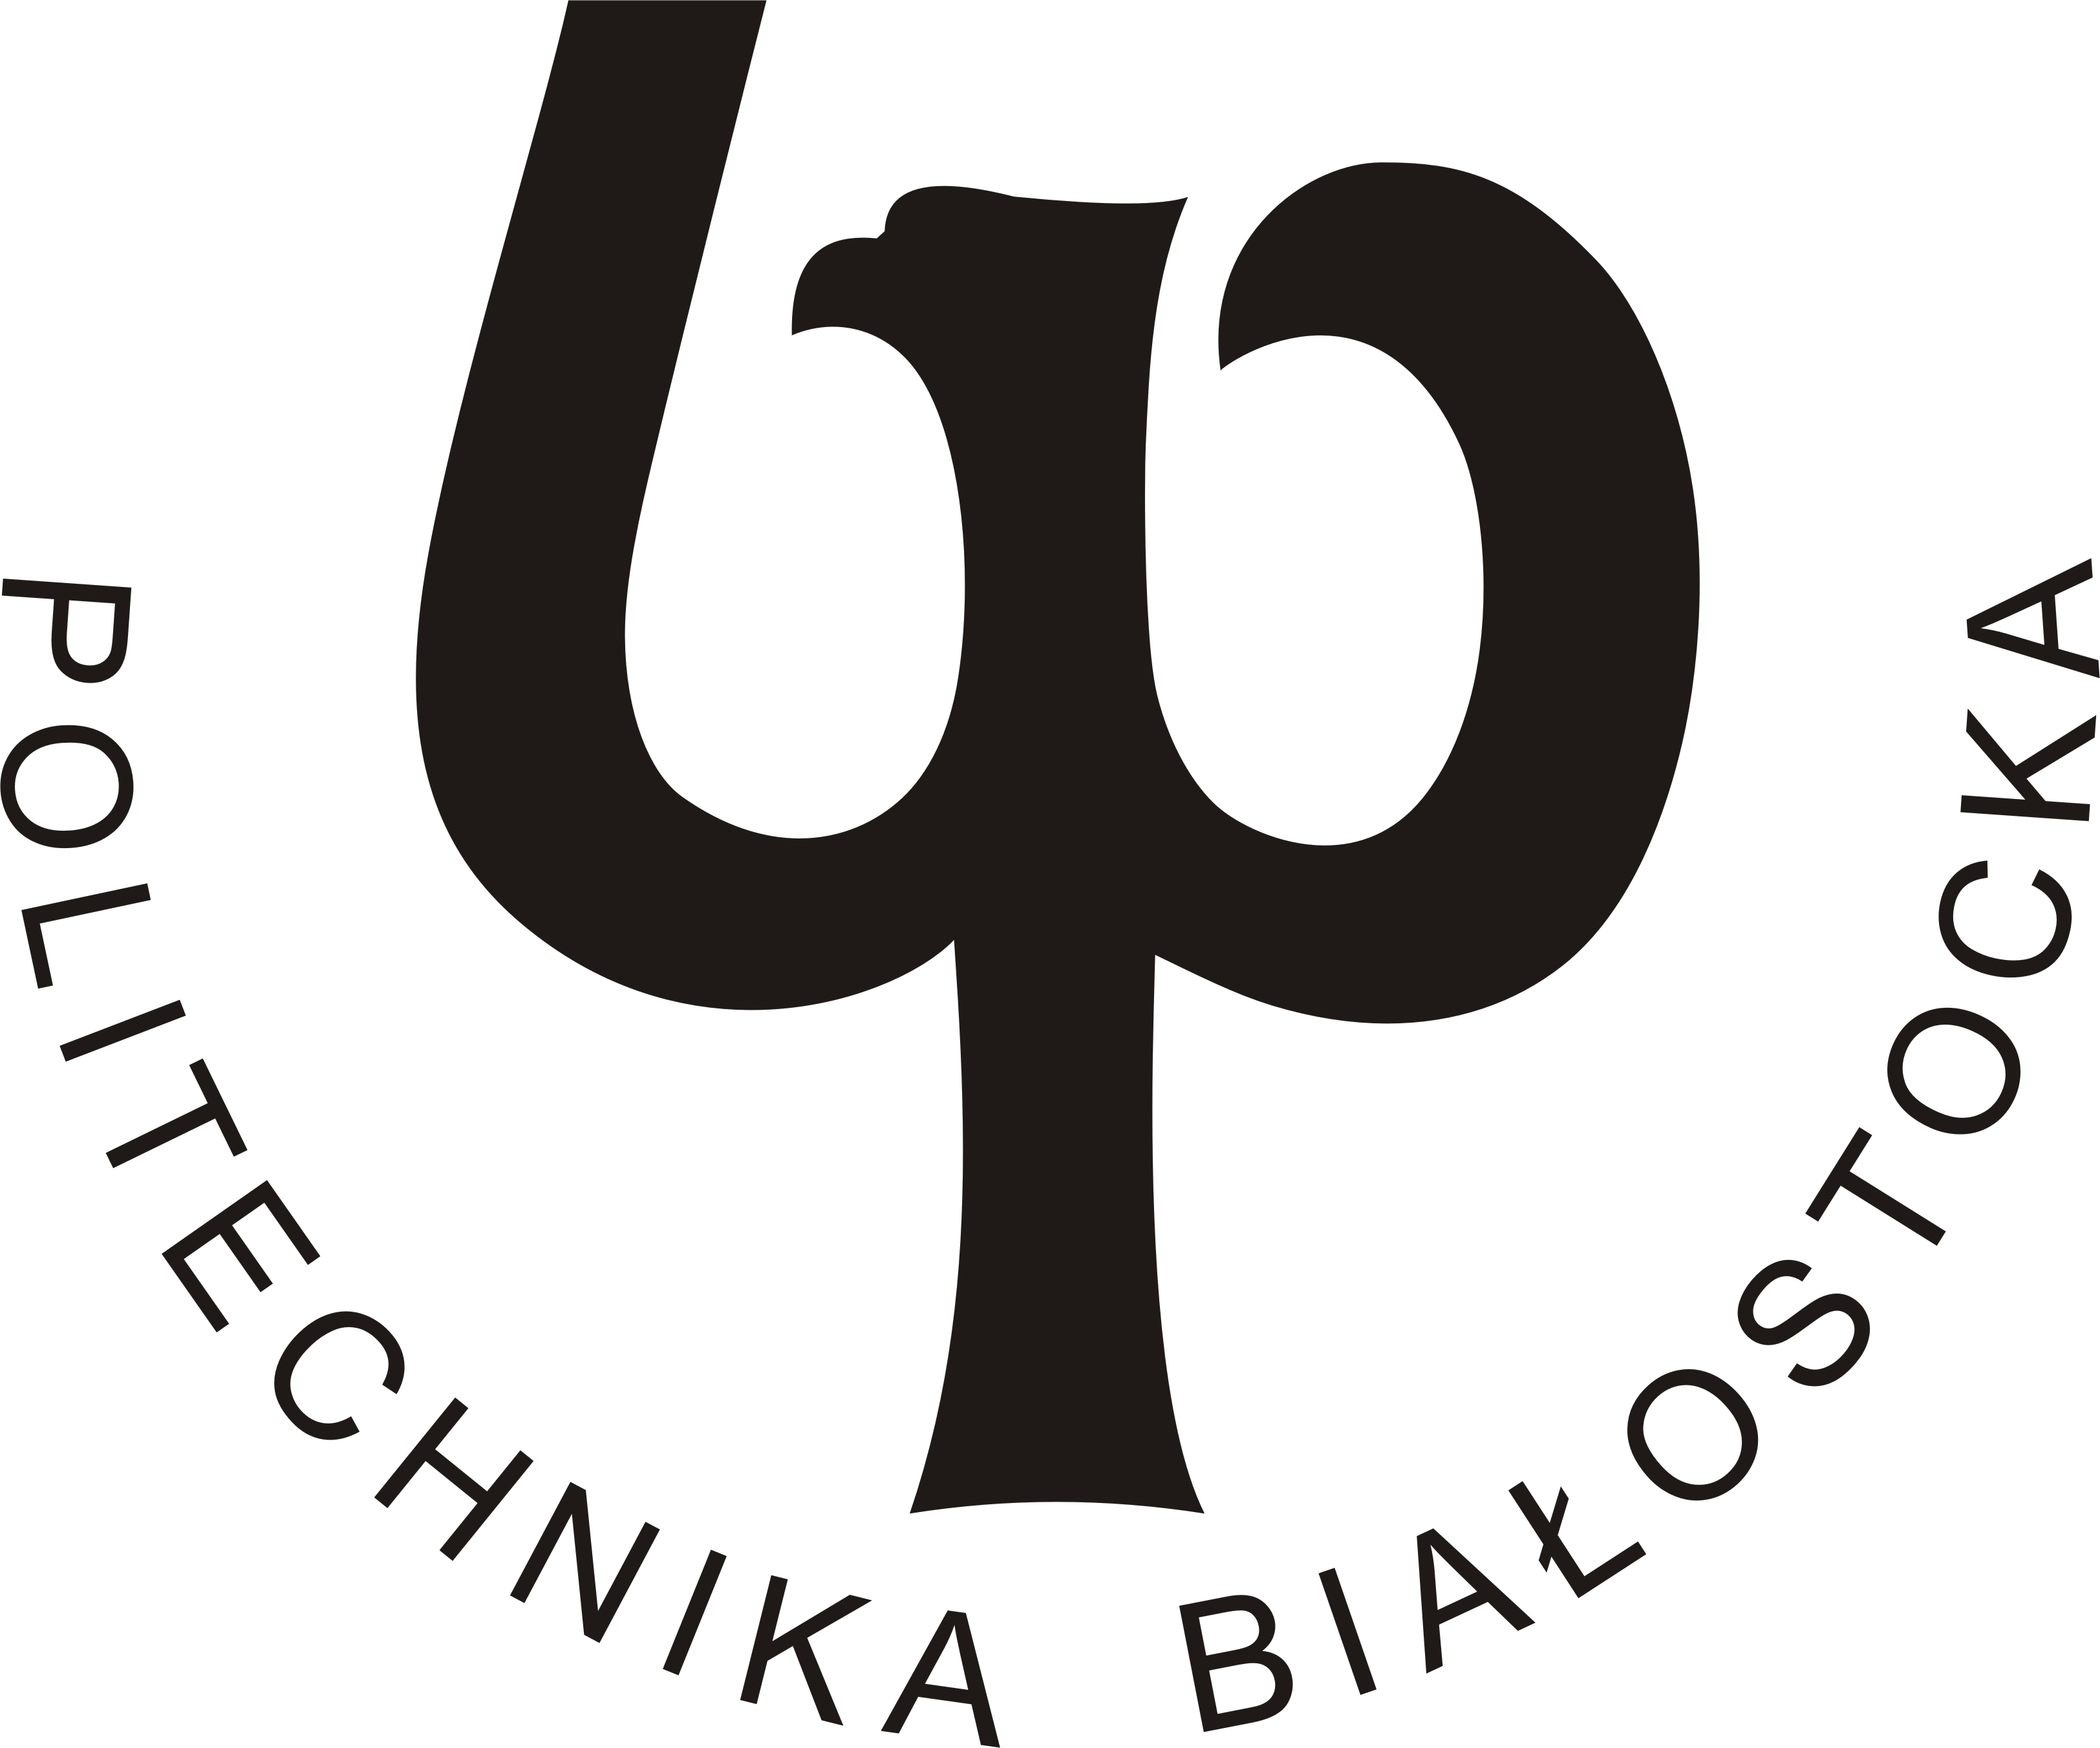 PL3 - Politechnika Białostocka